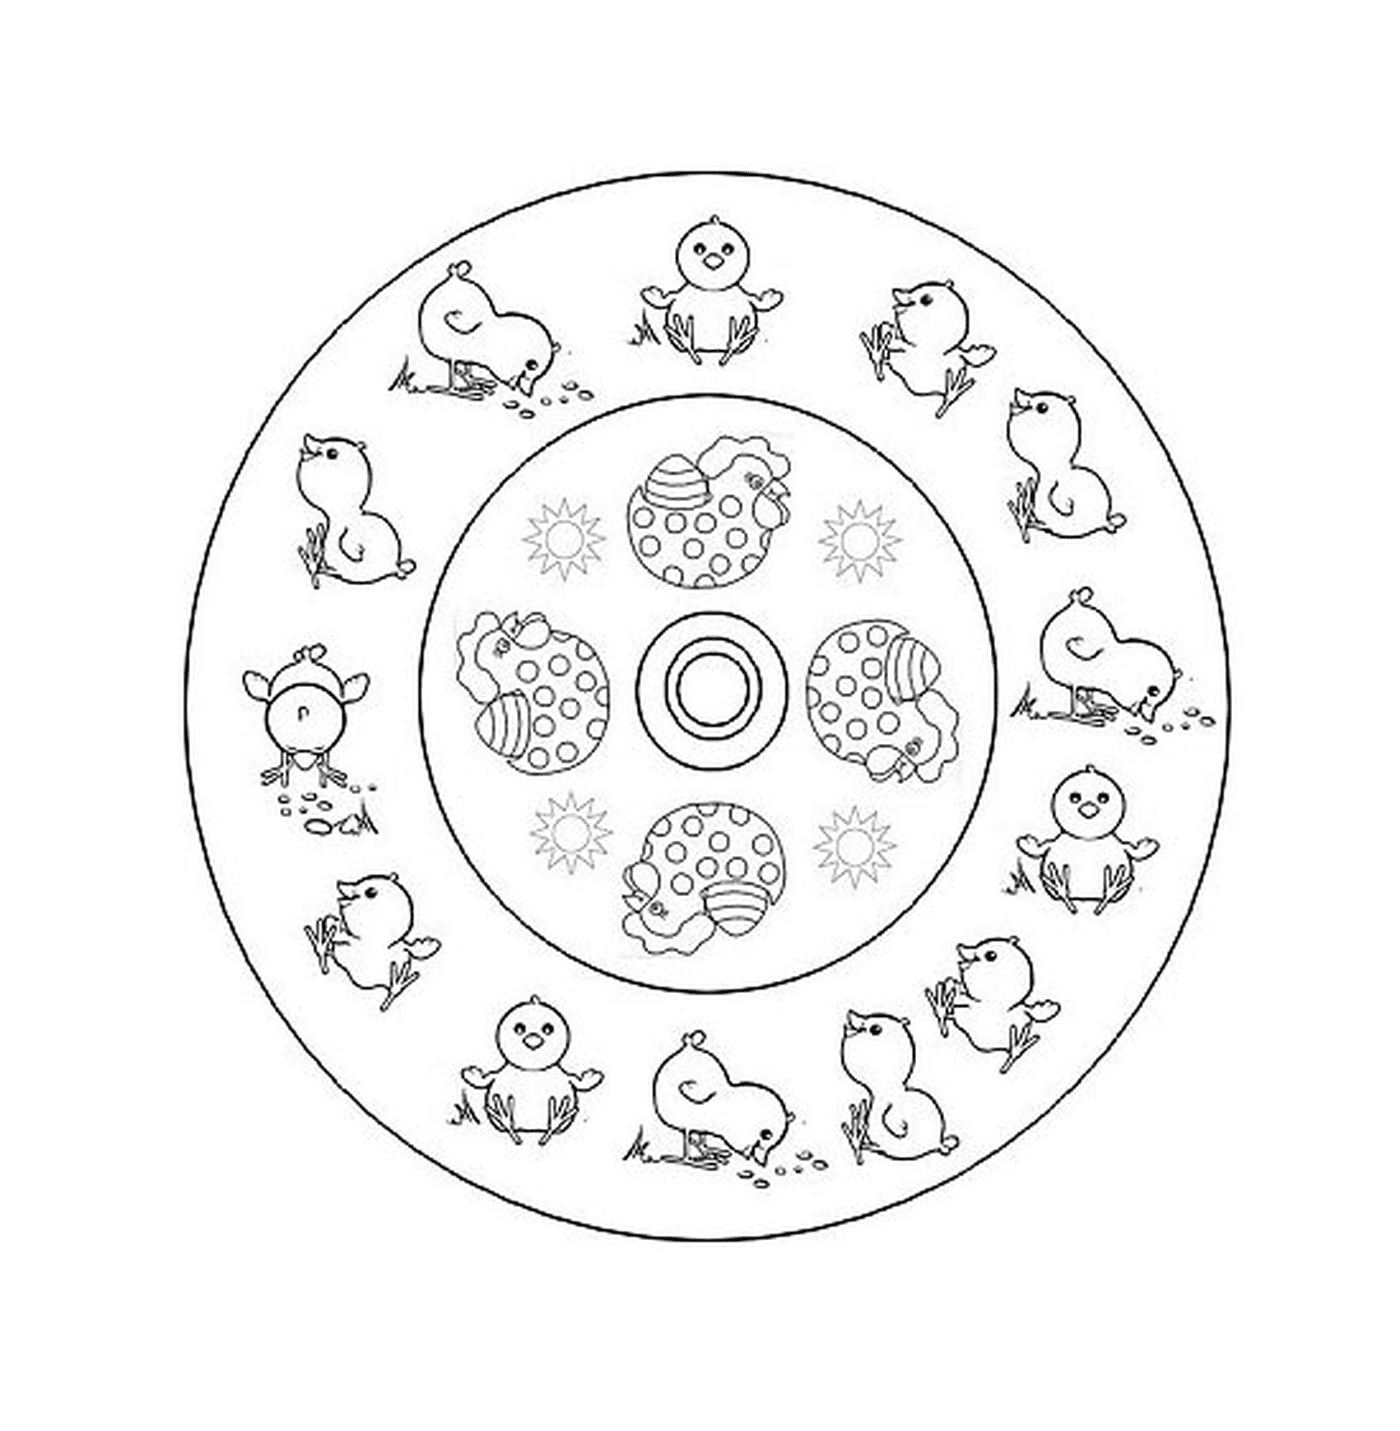  Mandala with different animals 